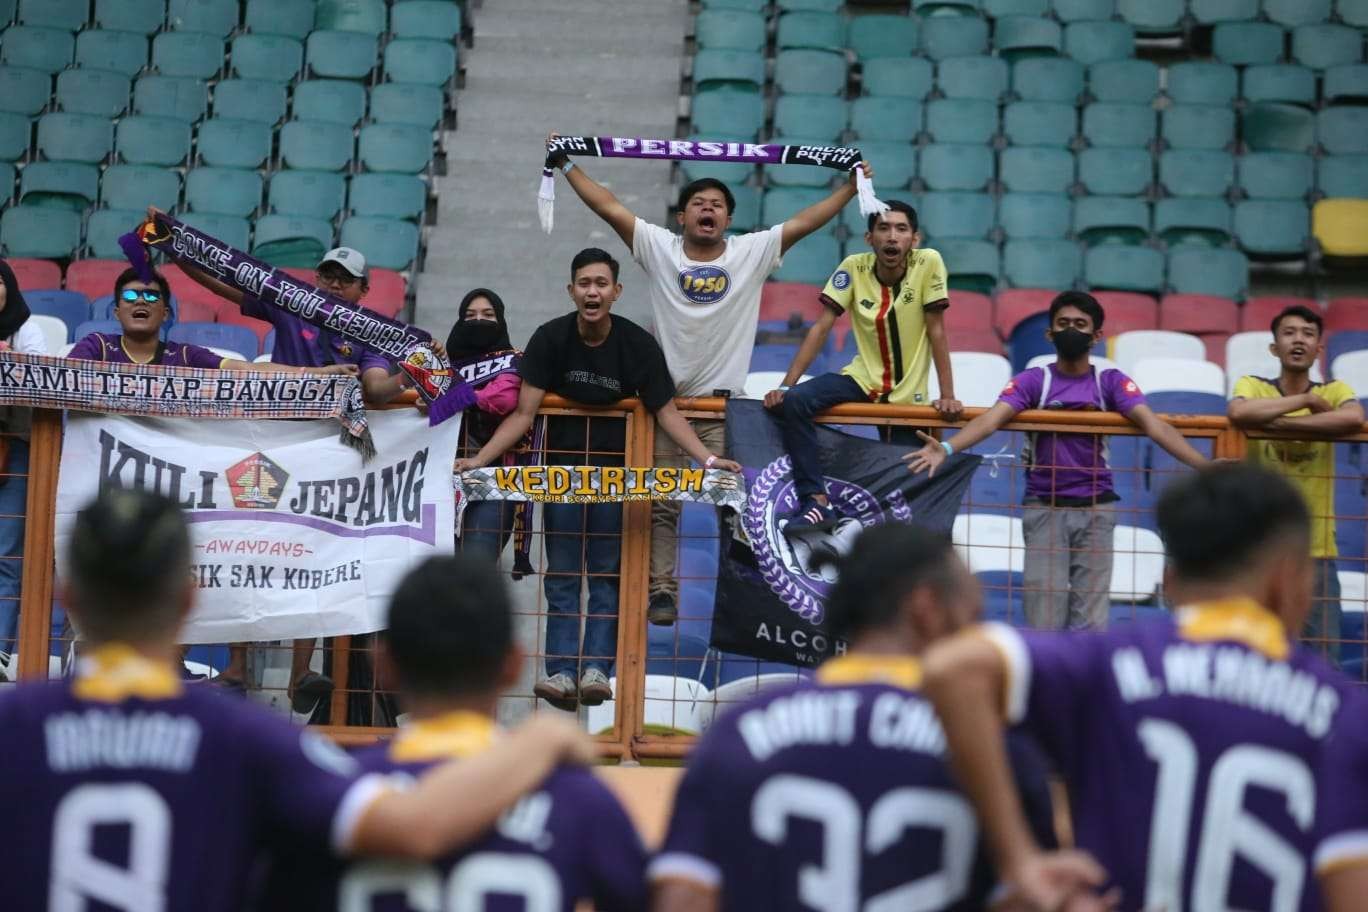 Derbi Jatim, Persik vs Madura United tanpa penonton. (Foto: Media Officer Persik )